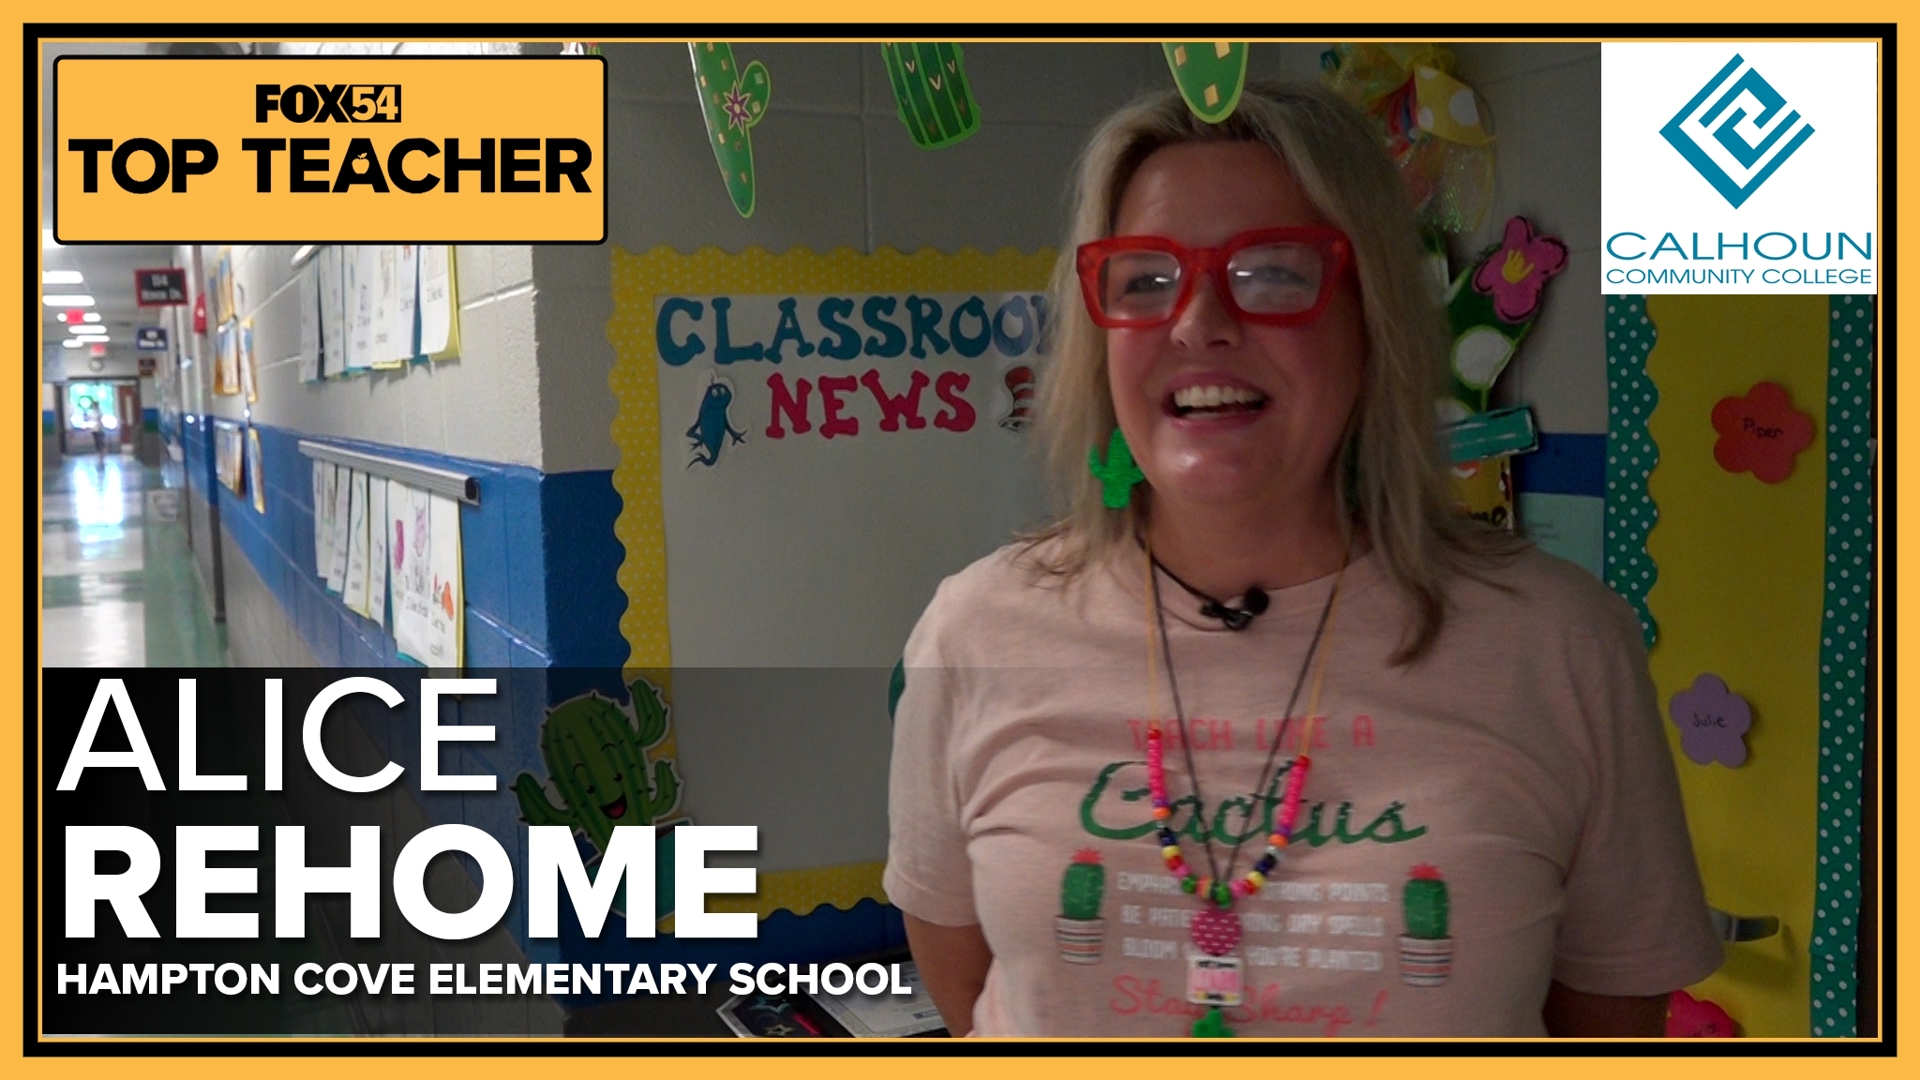 Alice Rehome has been teaching kindergarten for six years.